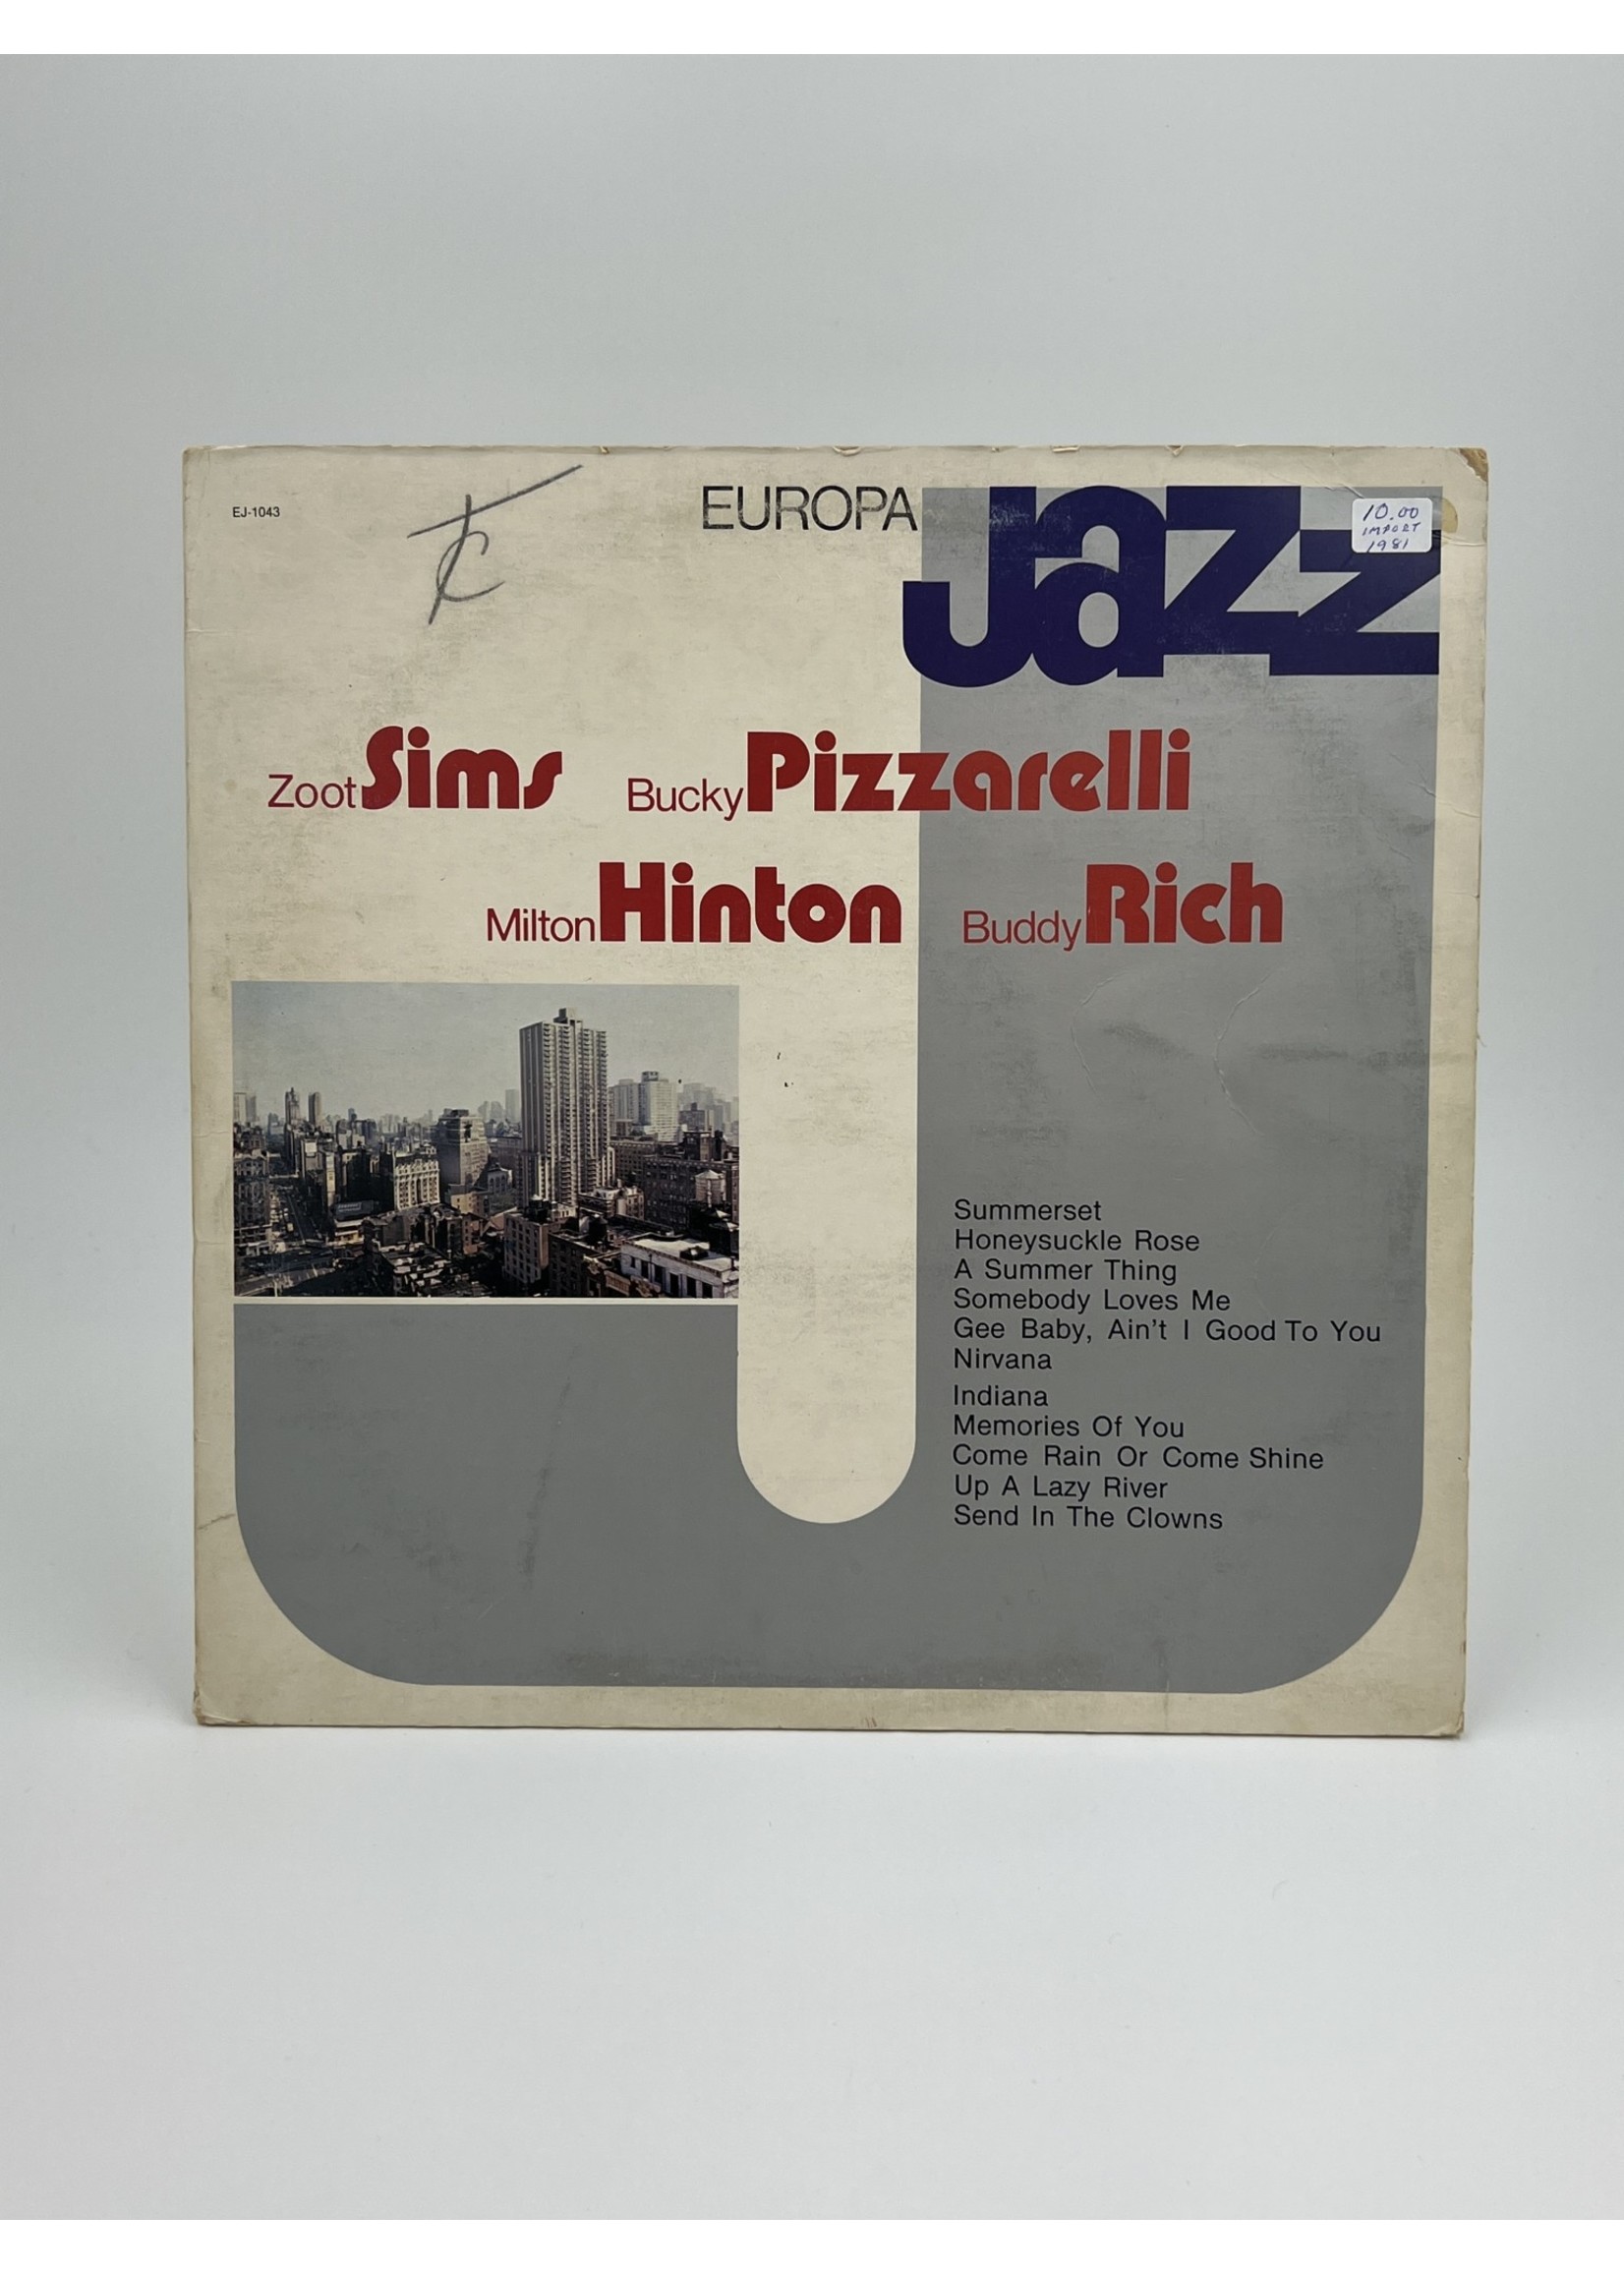 LP Europa Jazz LP Record